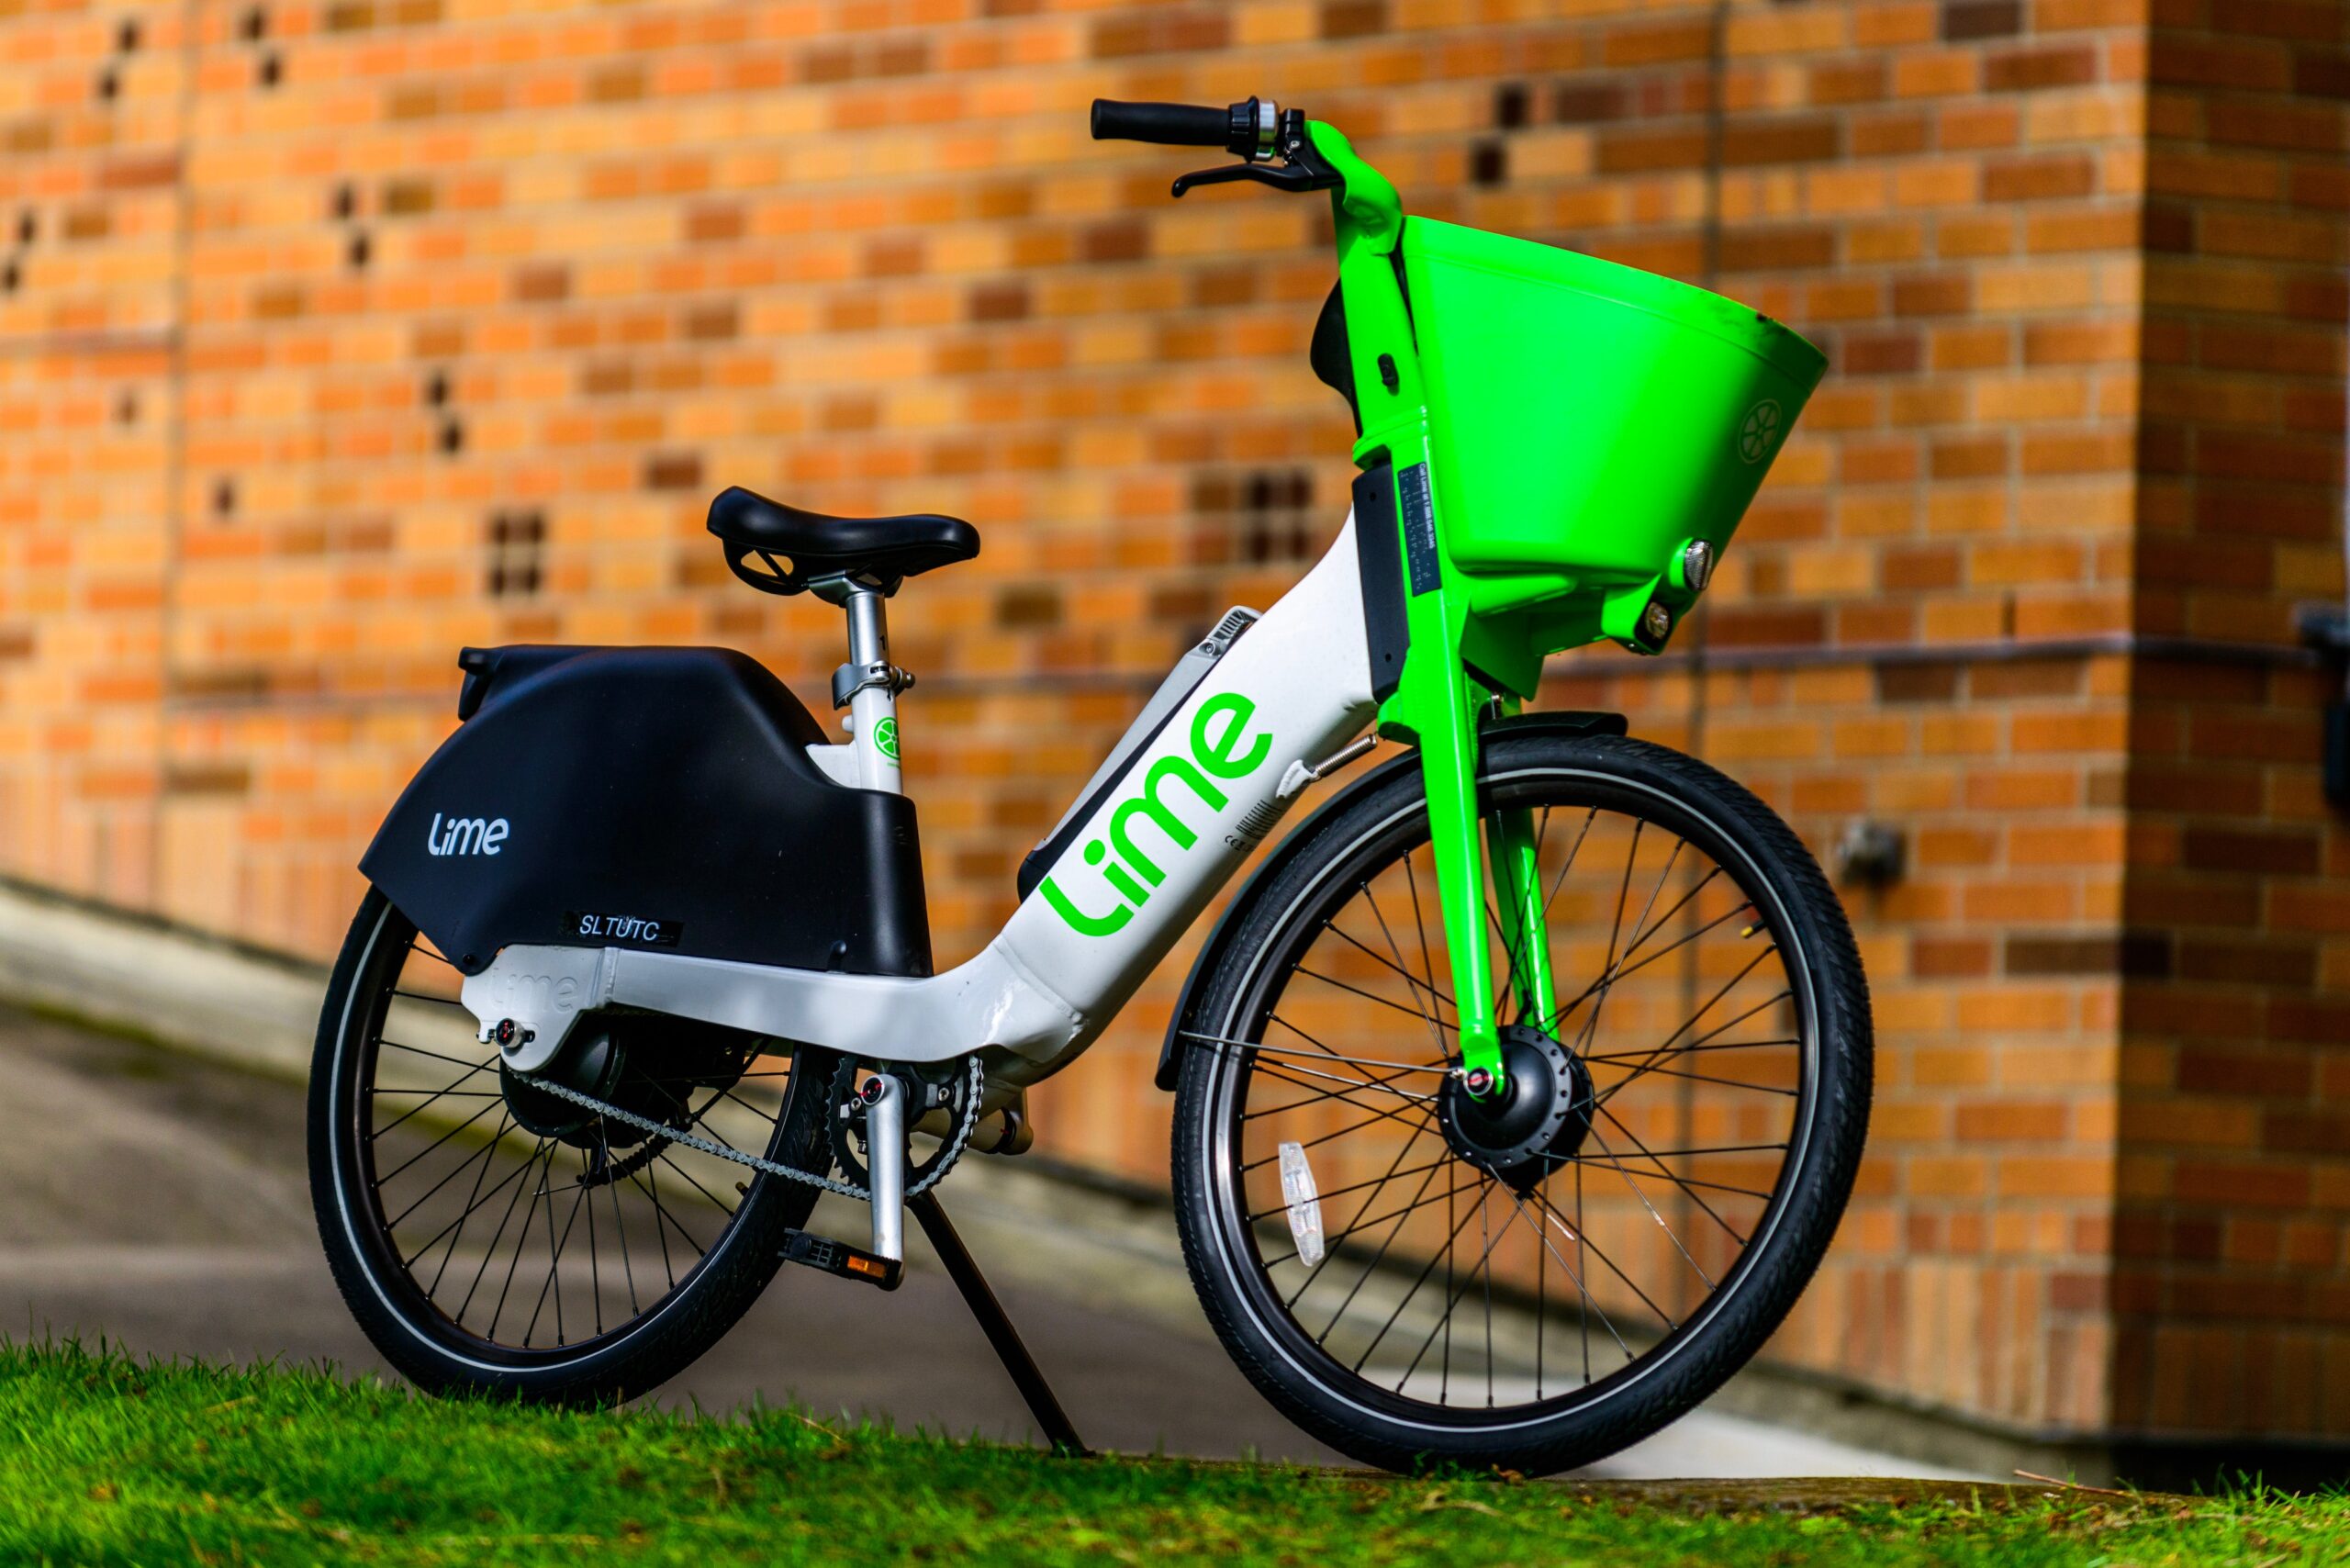 Bicicleta elétrica da marca "Lime"